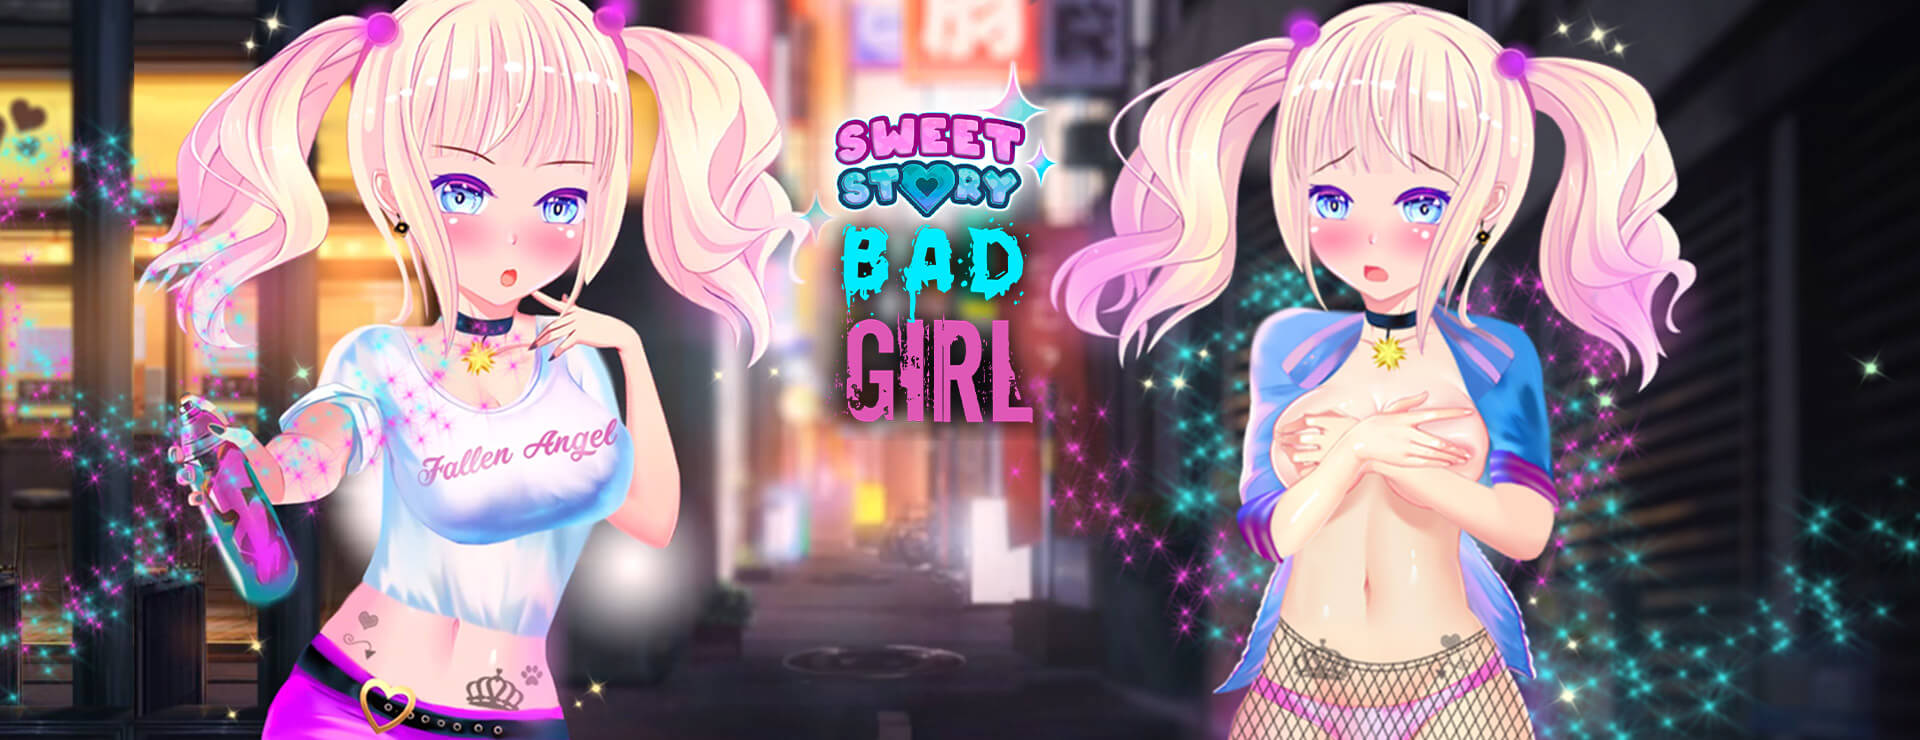 Sweet Story Bad Girl - Casual Juego